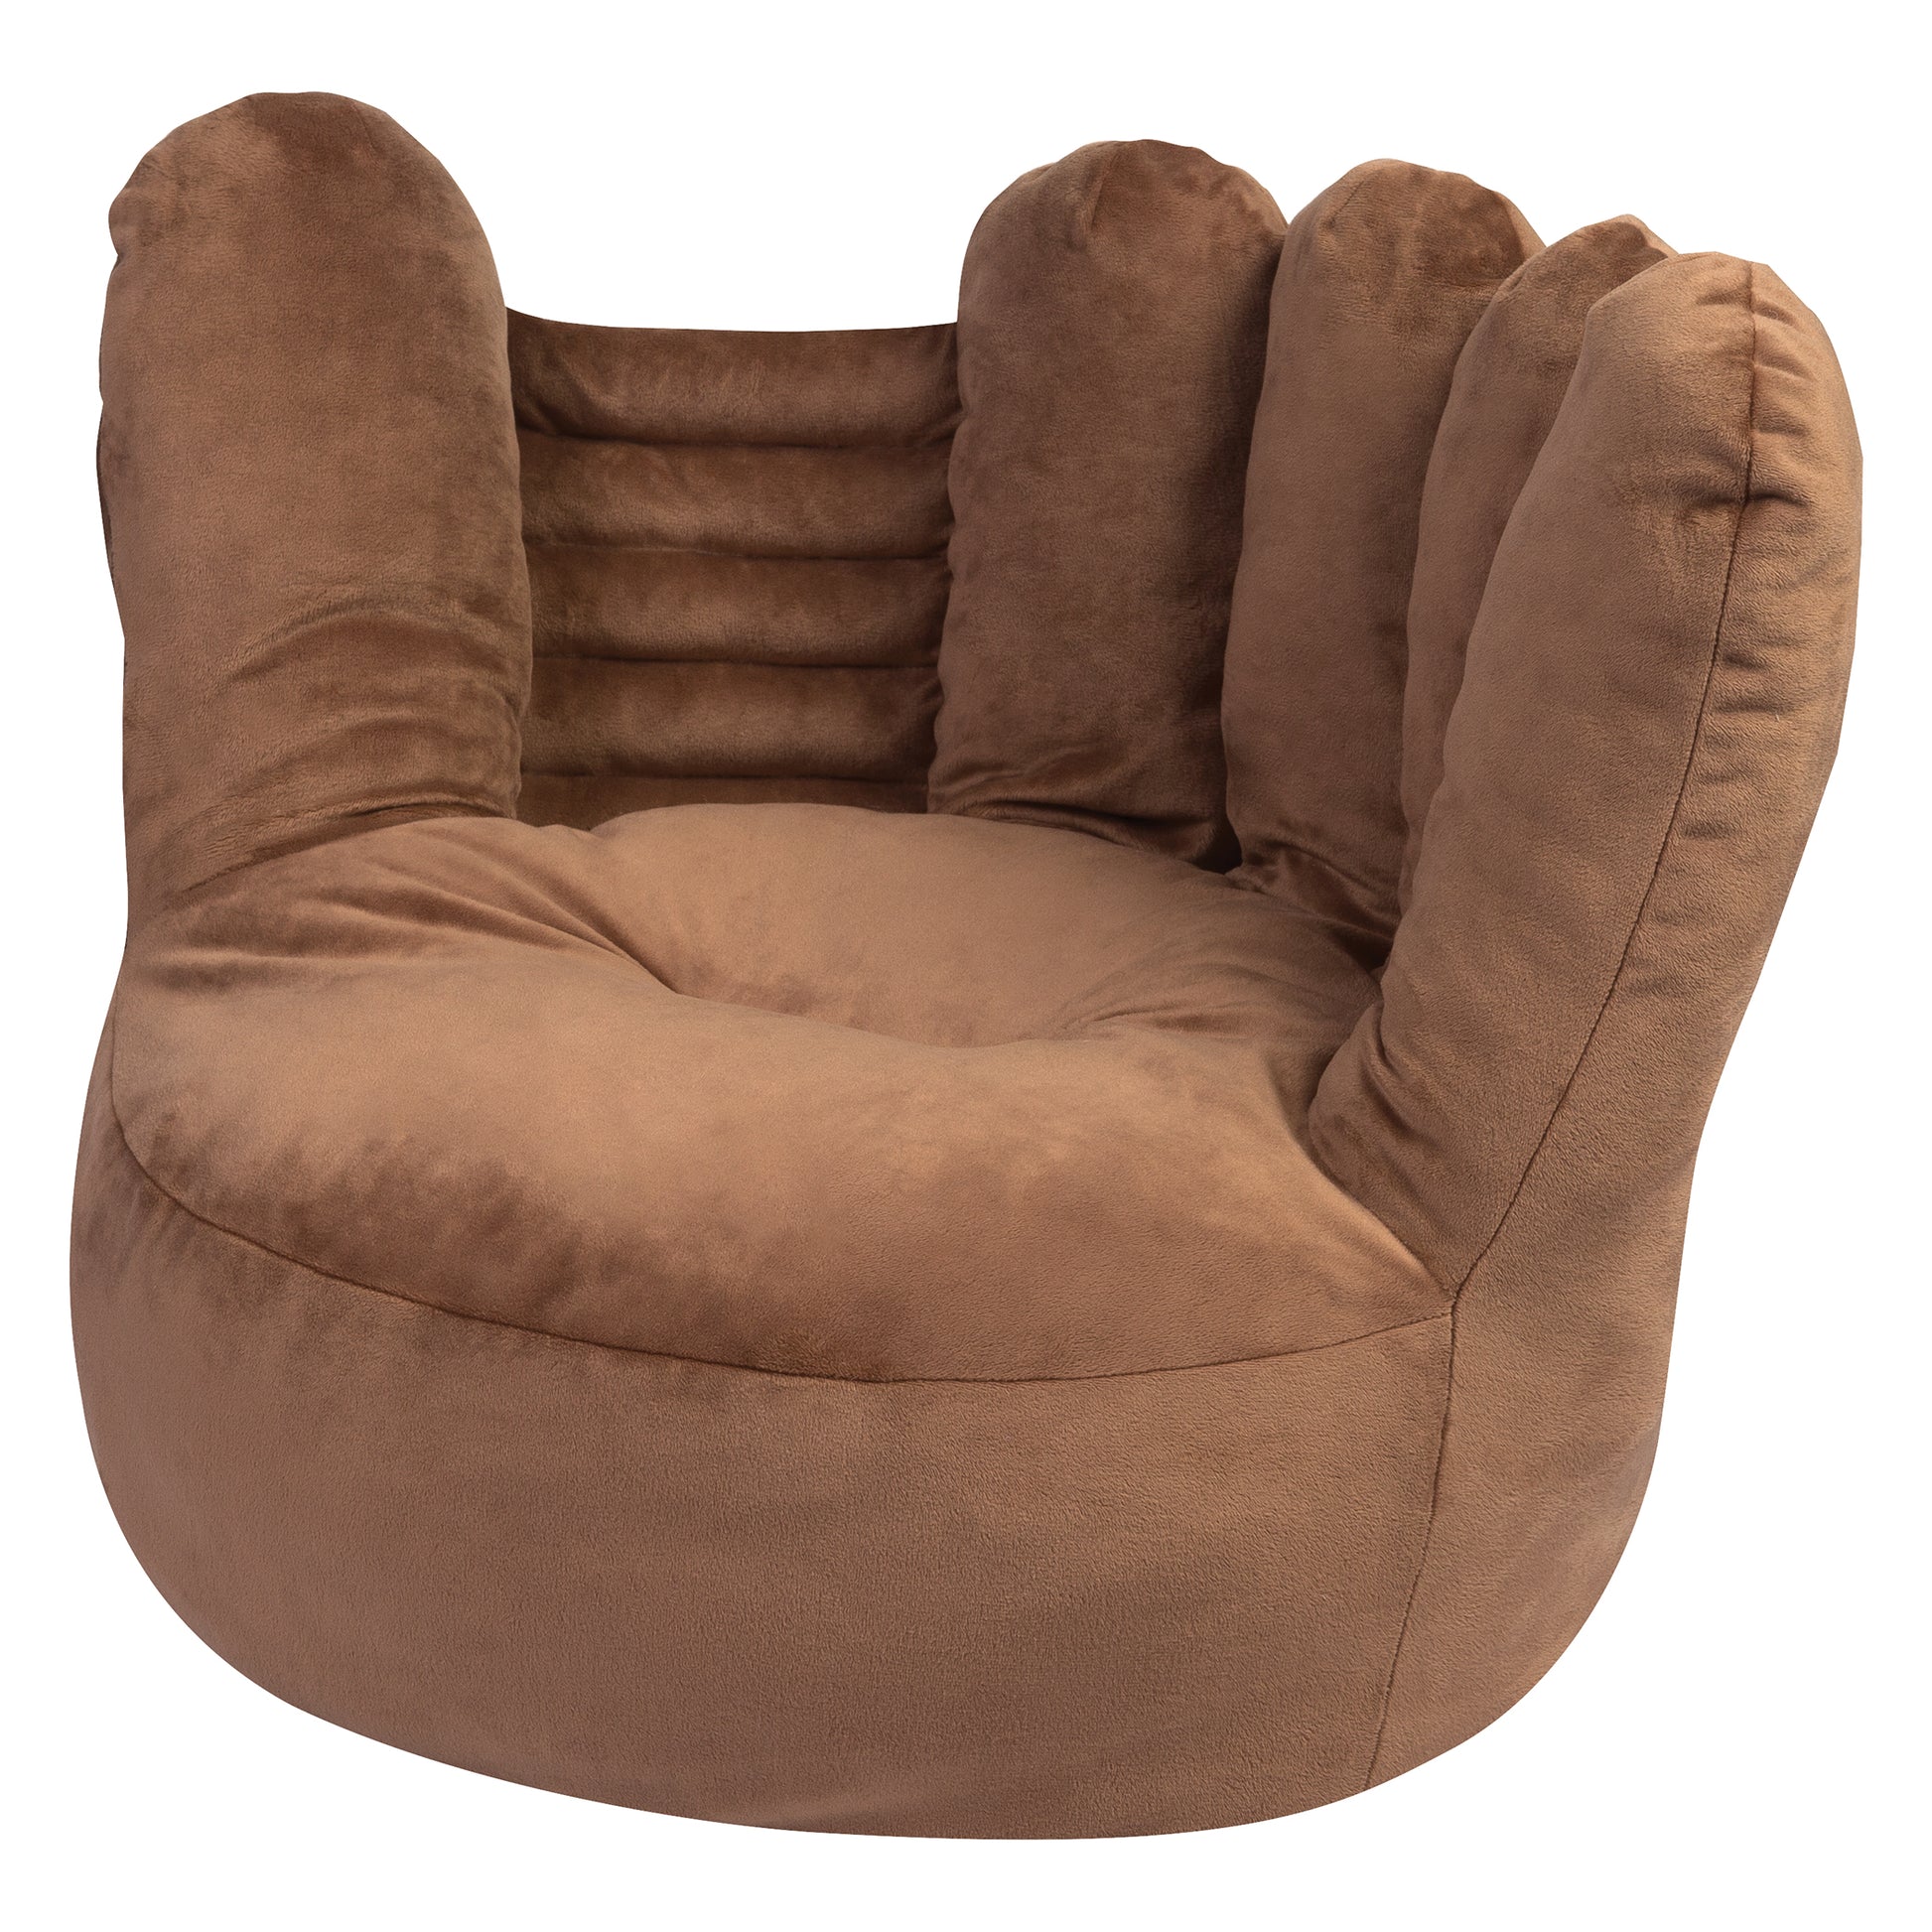 Children's Plush Glove Character Chair103405$69.99Trend Lab